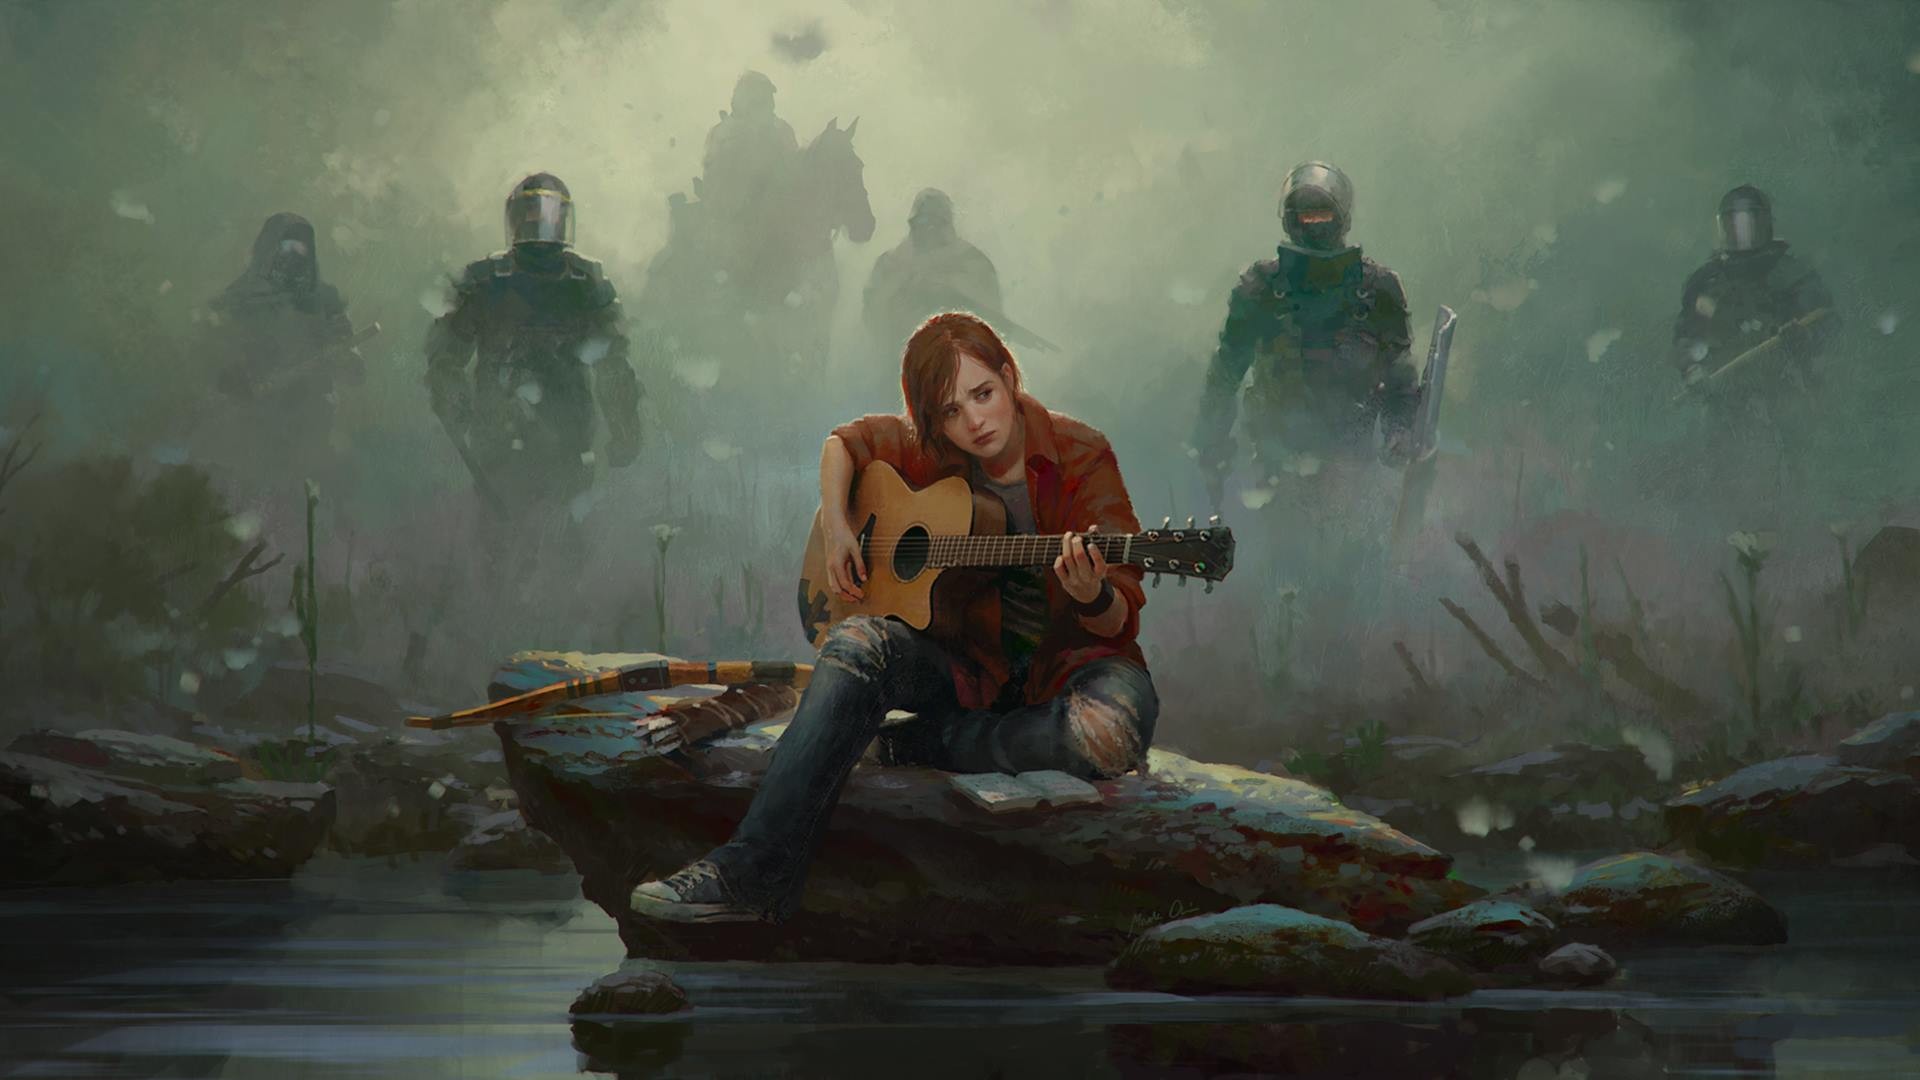 HD wallpaper: The Last of Us 2, ellie (the last of us), Joel, PlayStation